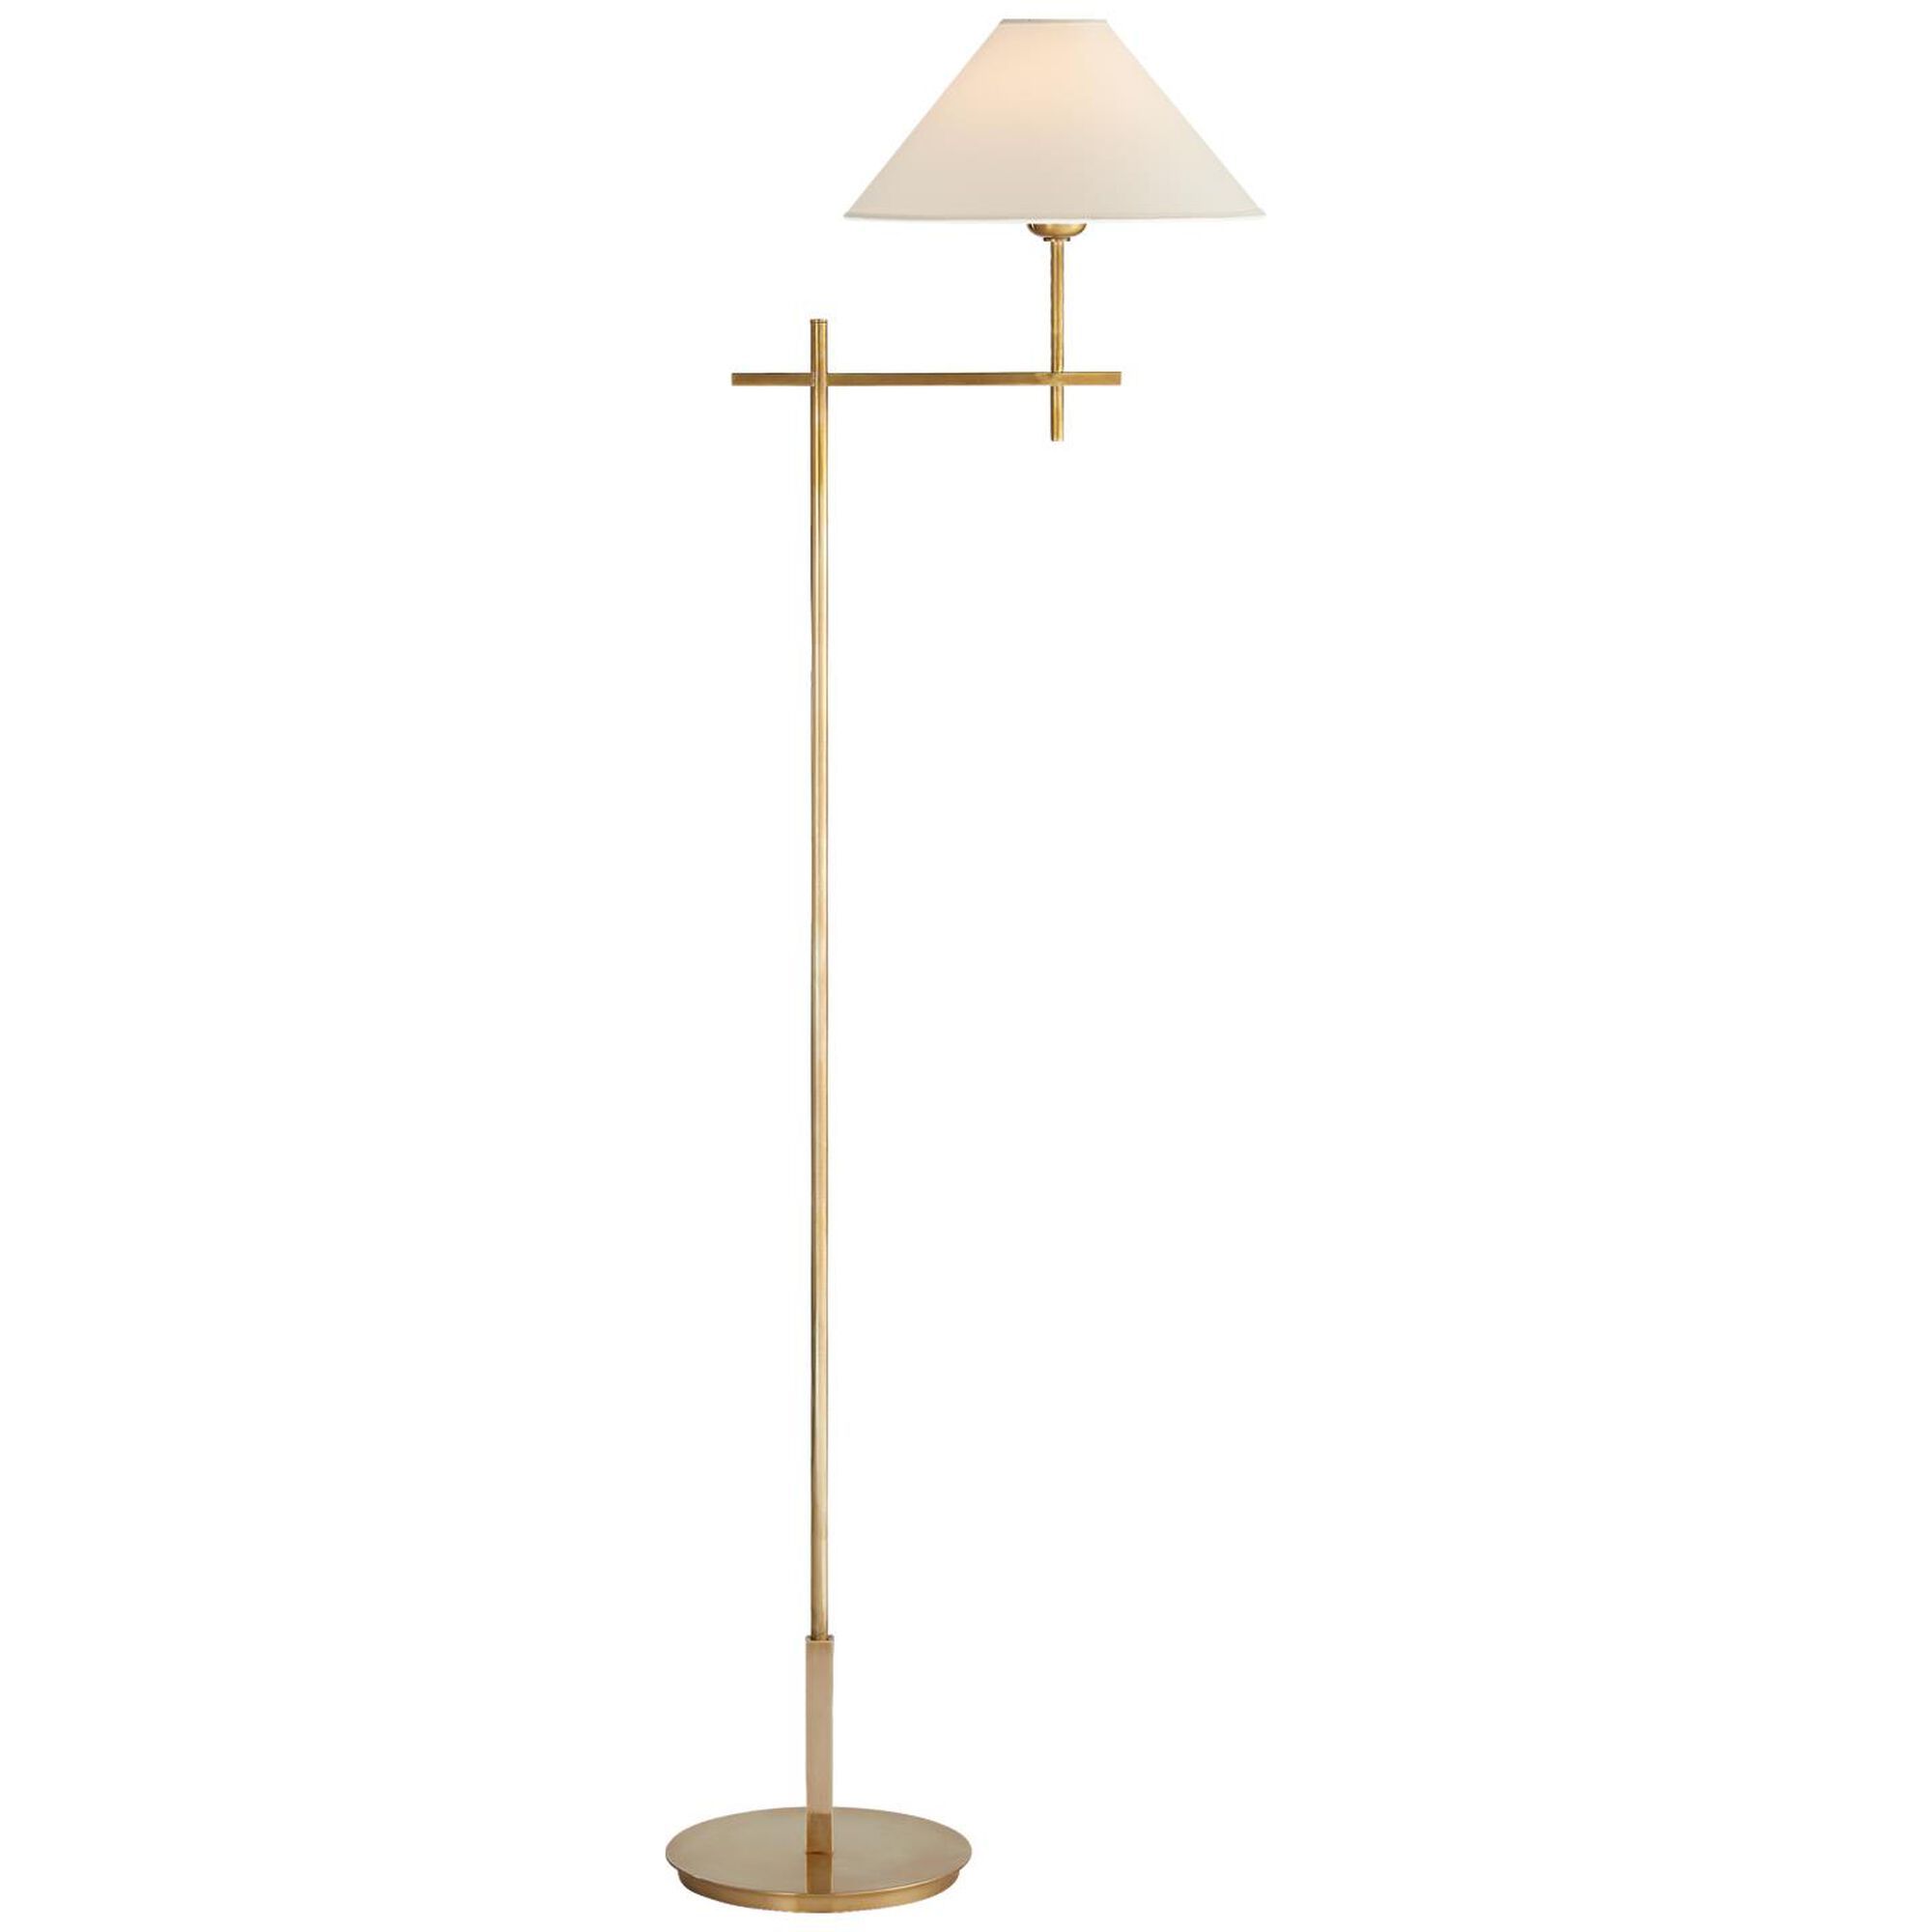 J. Randall Powers Hackney 52 Inch Floor Lamp by Visual Comfort and Co. | Capitol Lighting 1800lighting.com